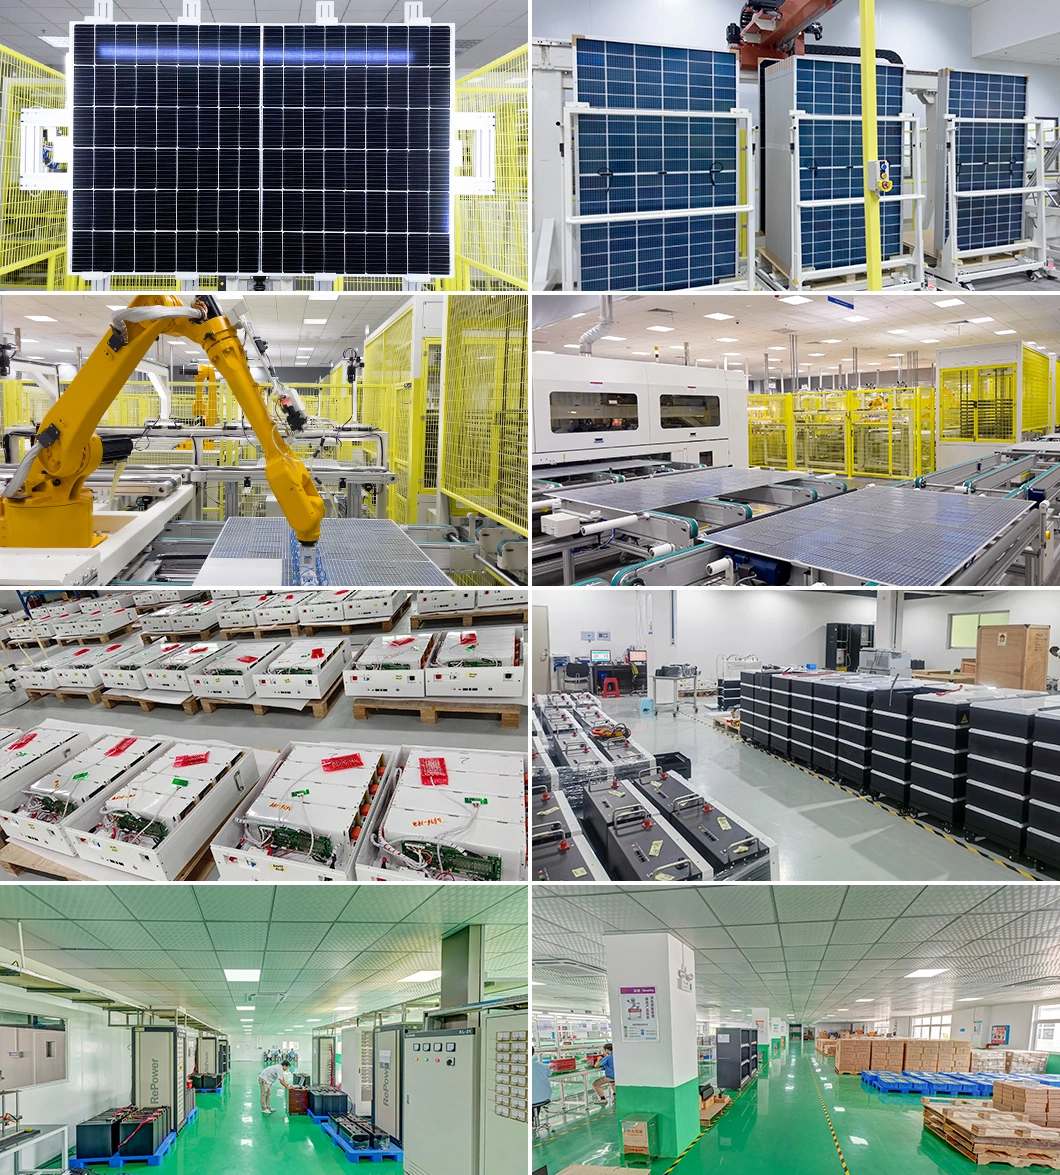 36 Kw 20Kw 10Kw Multifunction Solar Battery Hybrid Home Power Storage System